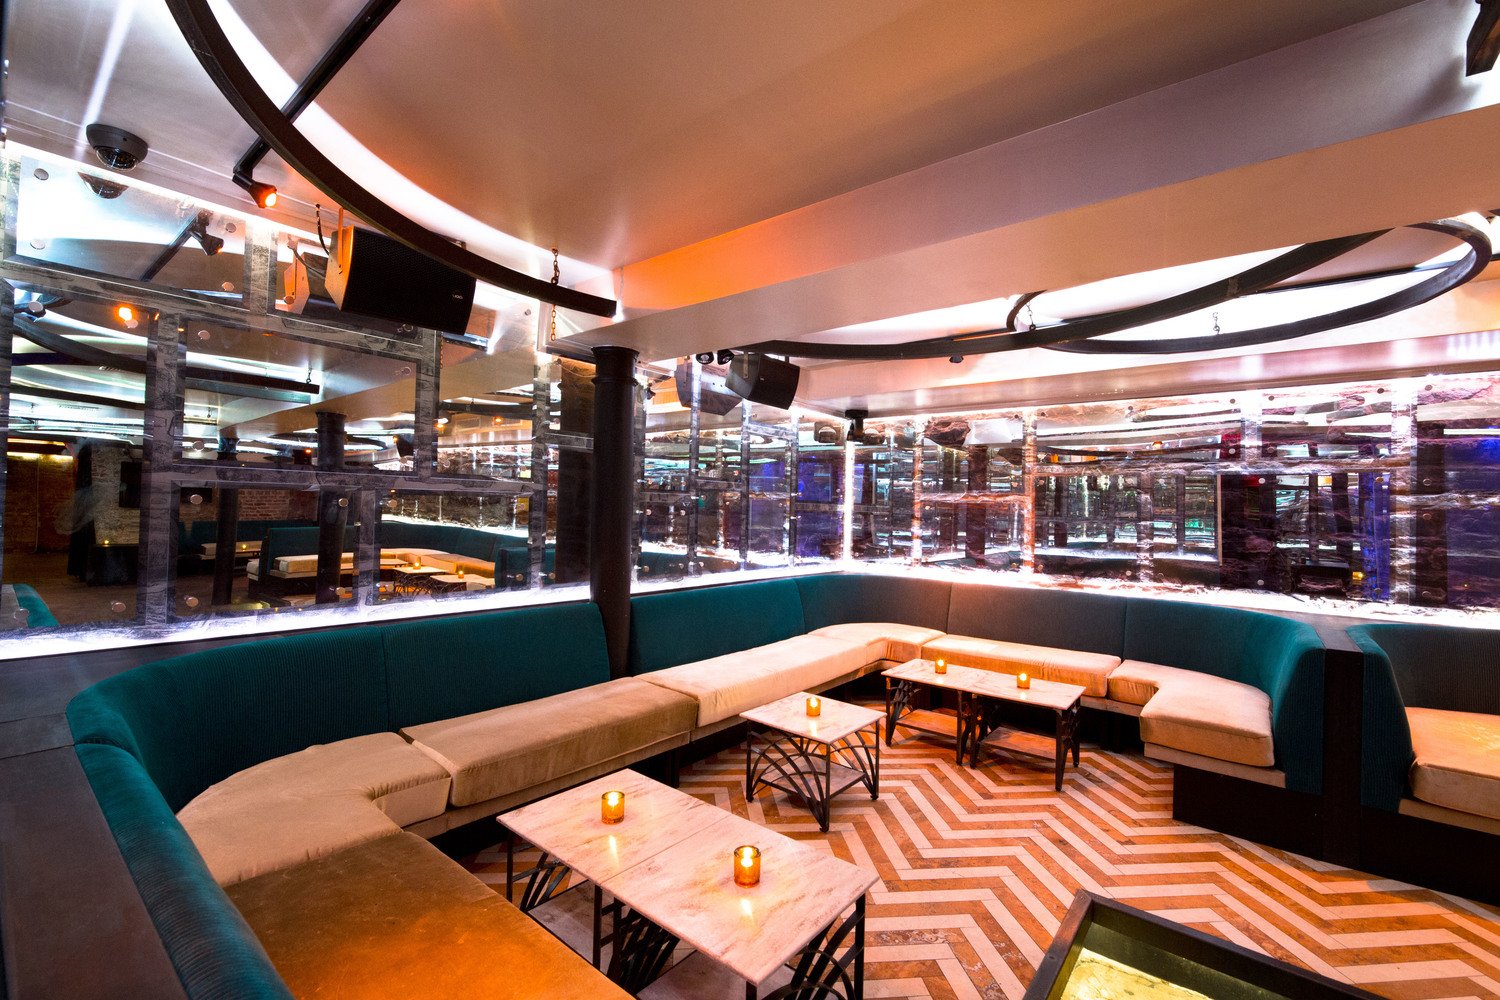 brickwood nightclub - interior design for nighclubs concept